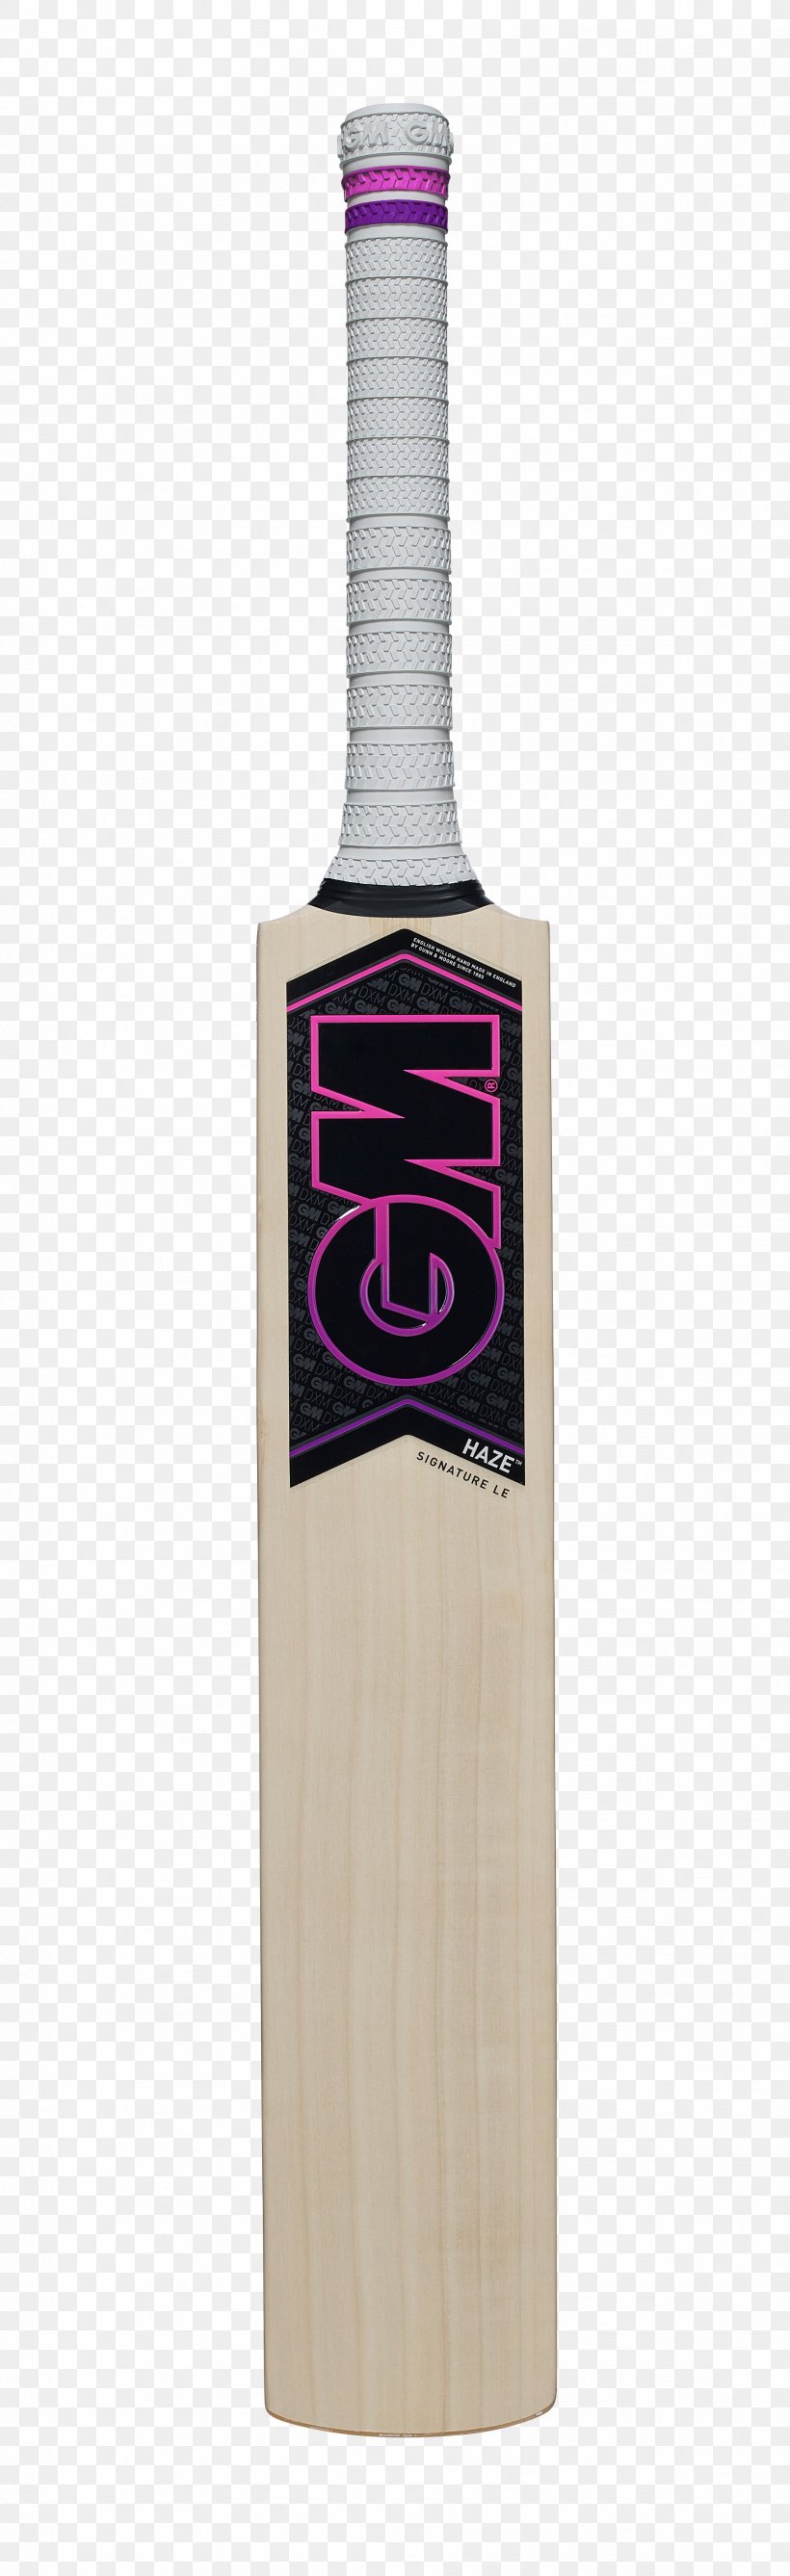 Cricket Bats Batting Gunn & Moore England, PNG, 1812x5913px, Cricket Bats, Batting, Bottle, Cricket, Cricket Bat Download Free